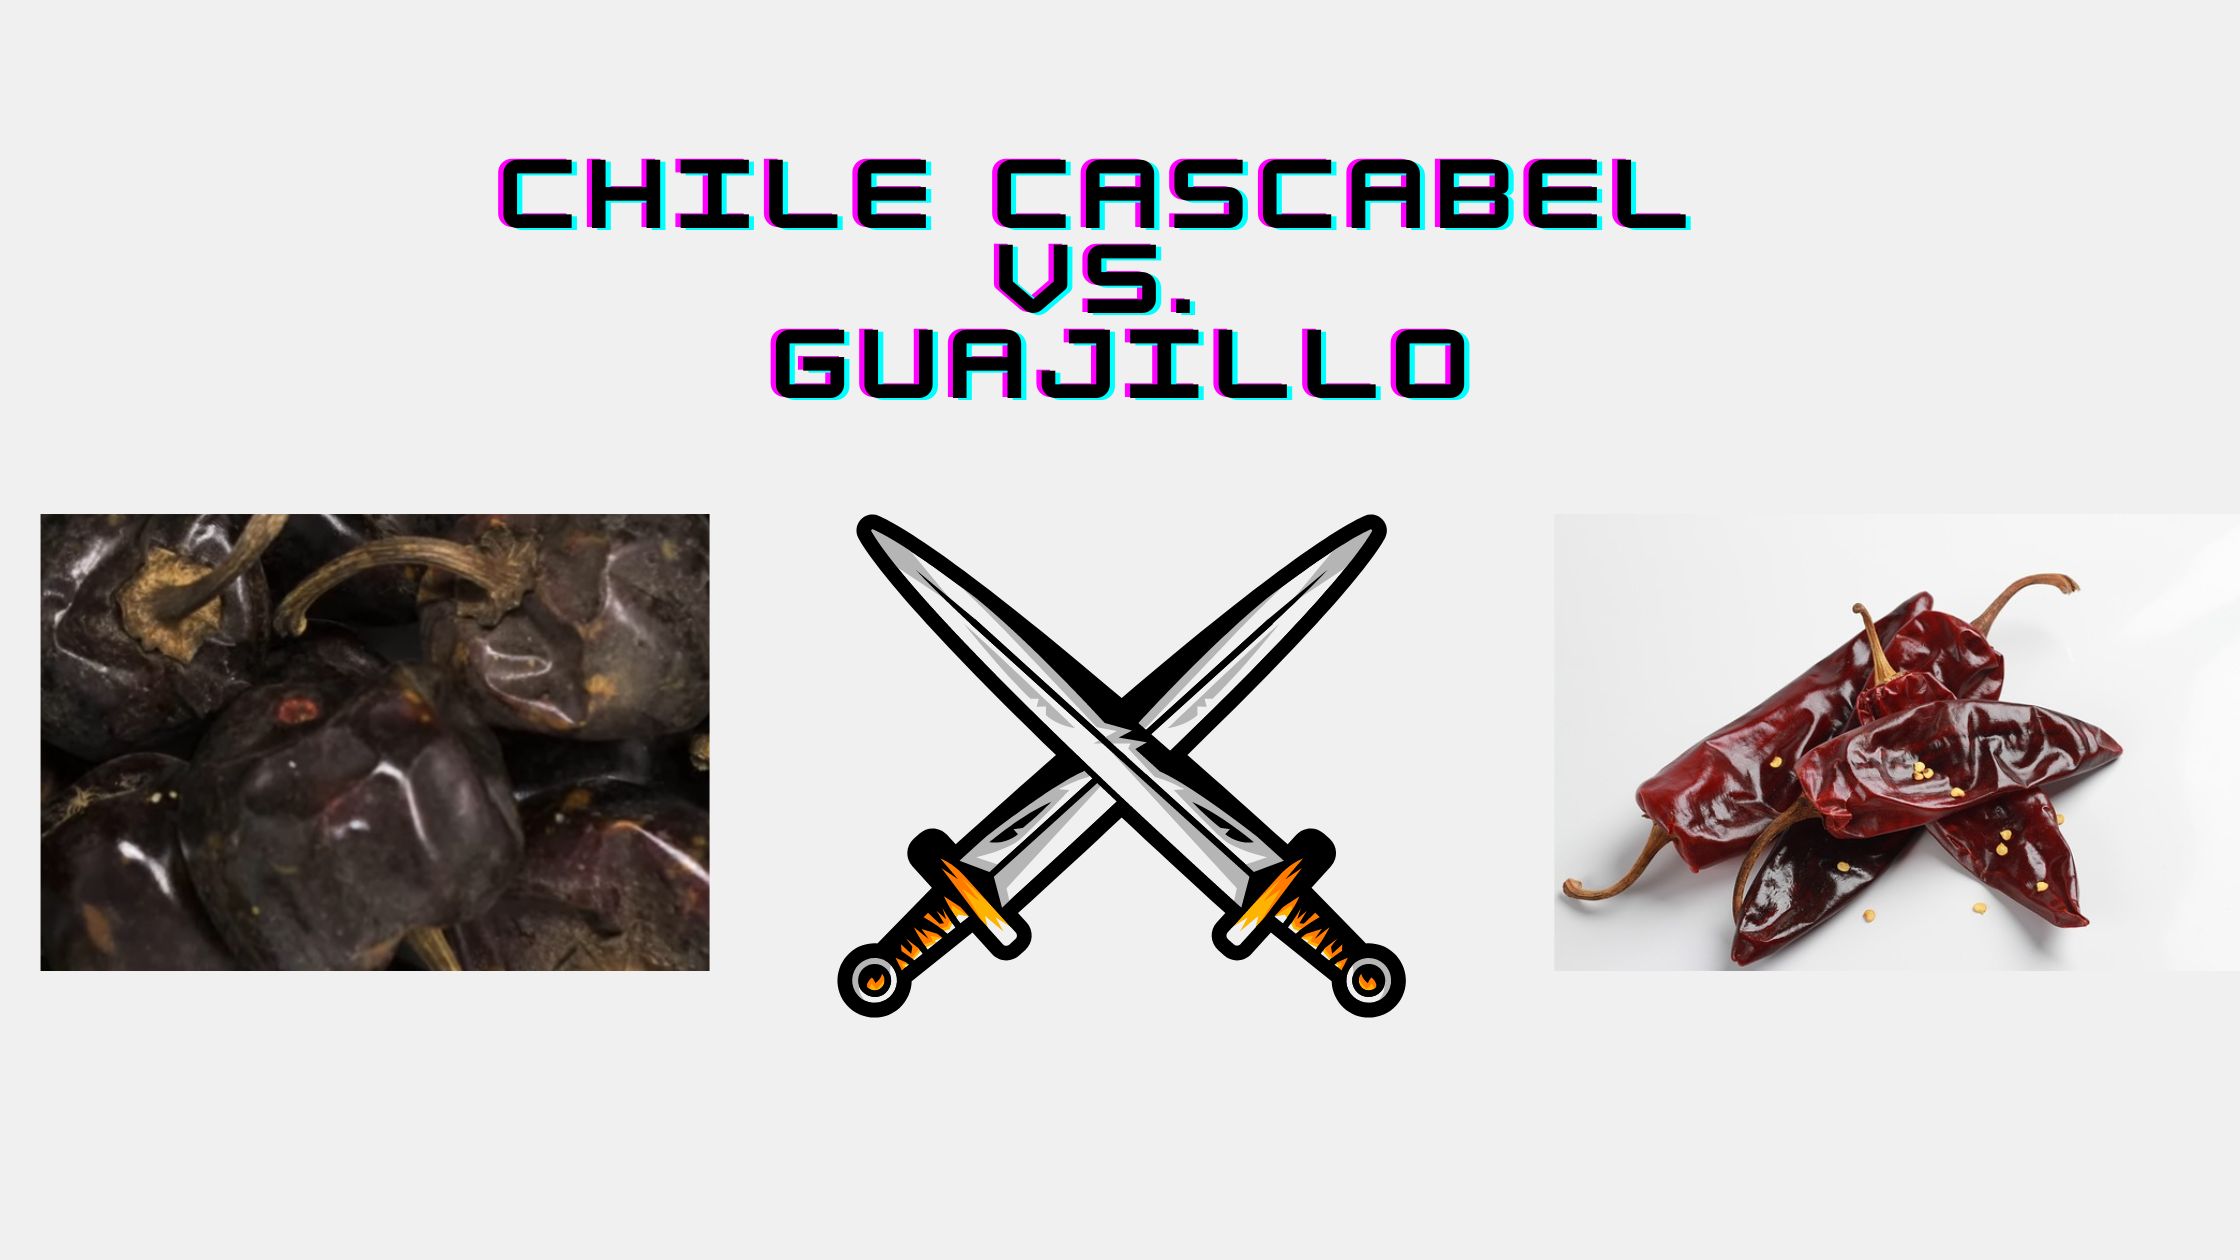 Is chile cascabel the same as guajillo